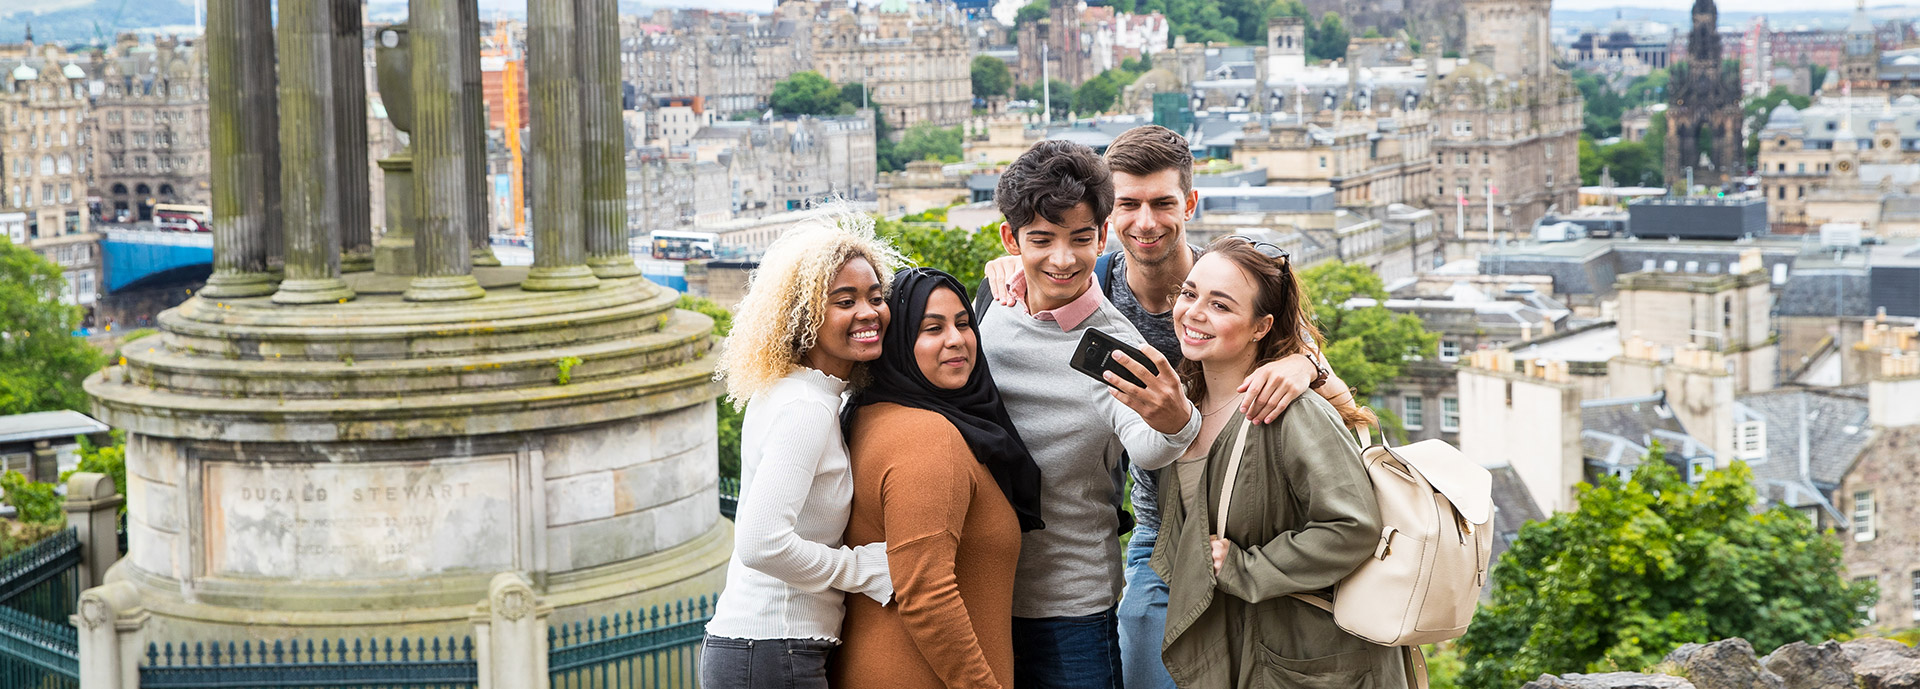 International Summer School students taking a selfie